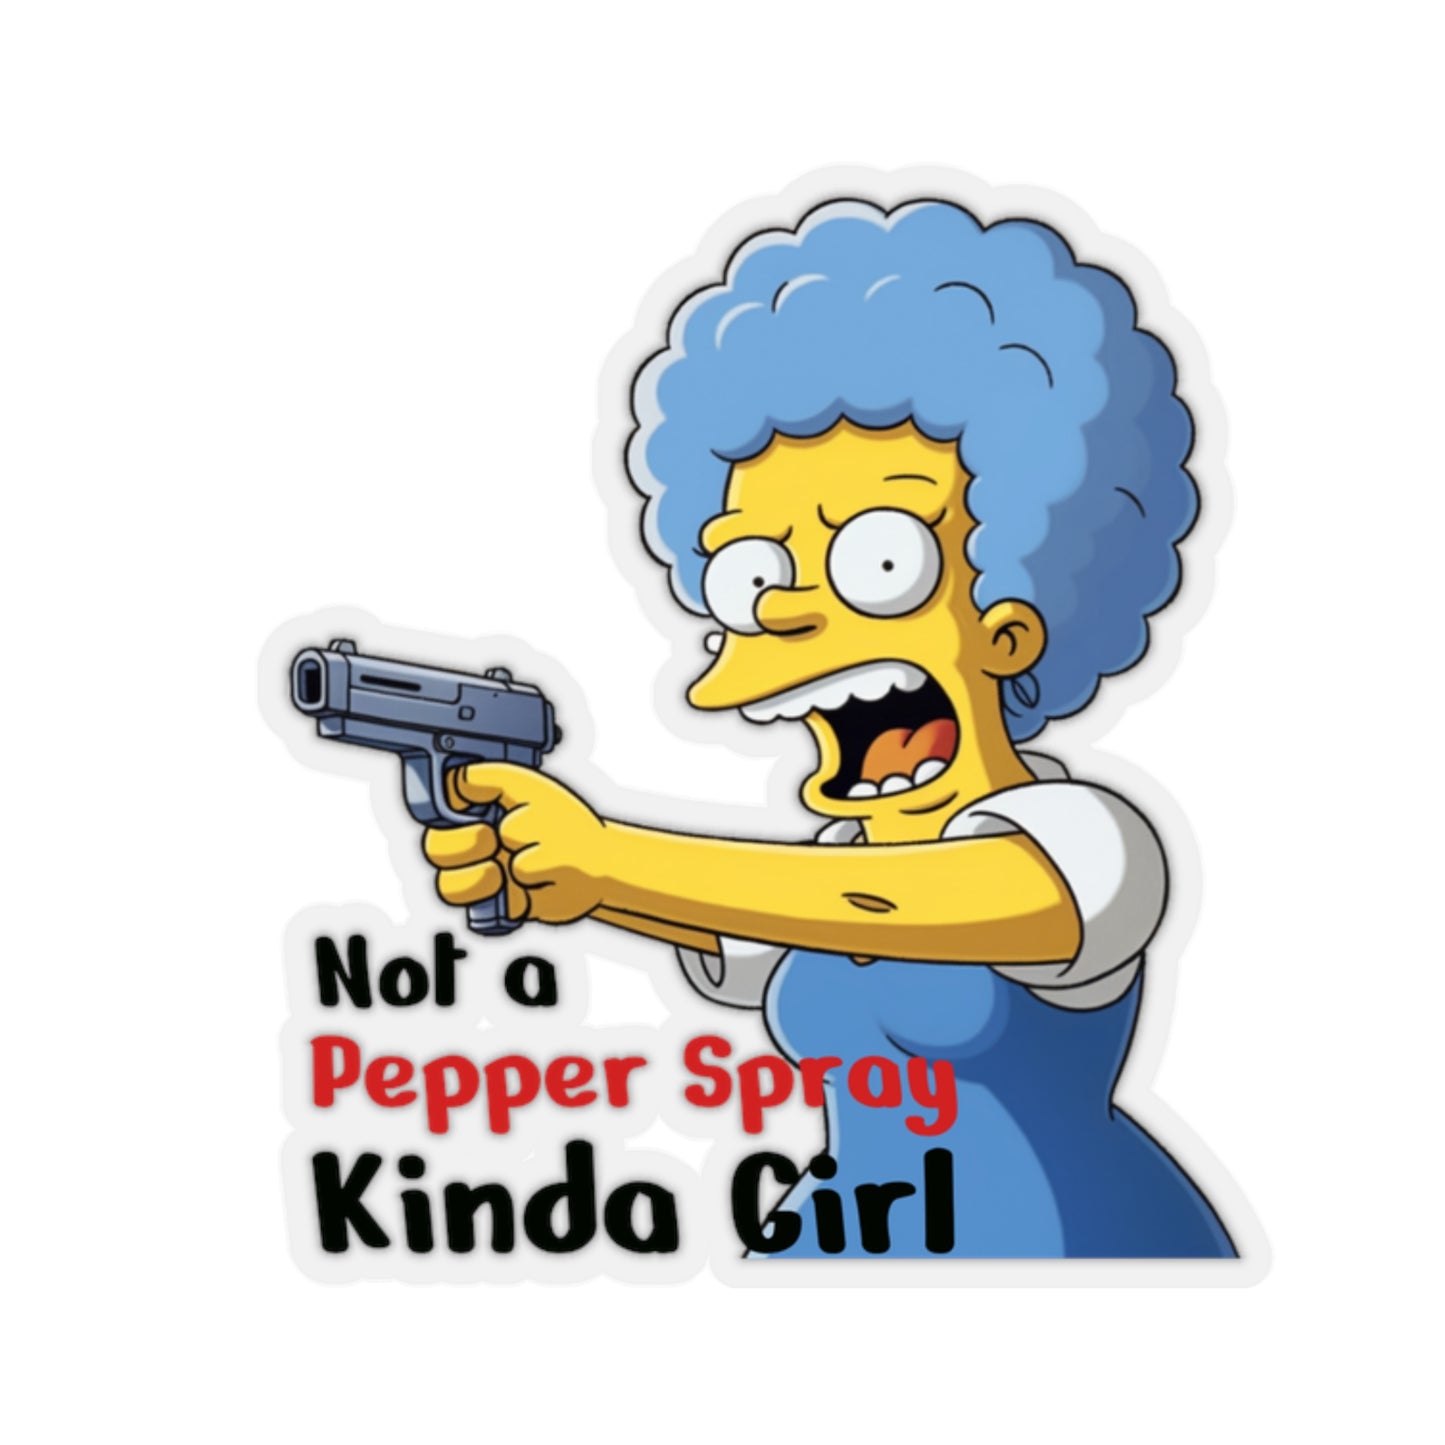 Not a pepper spray kinda of girl sticker